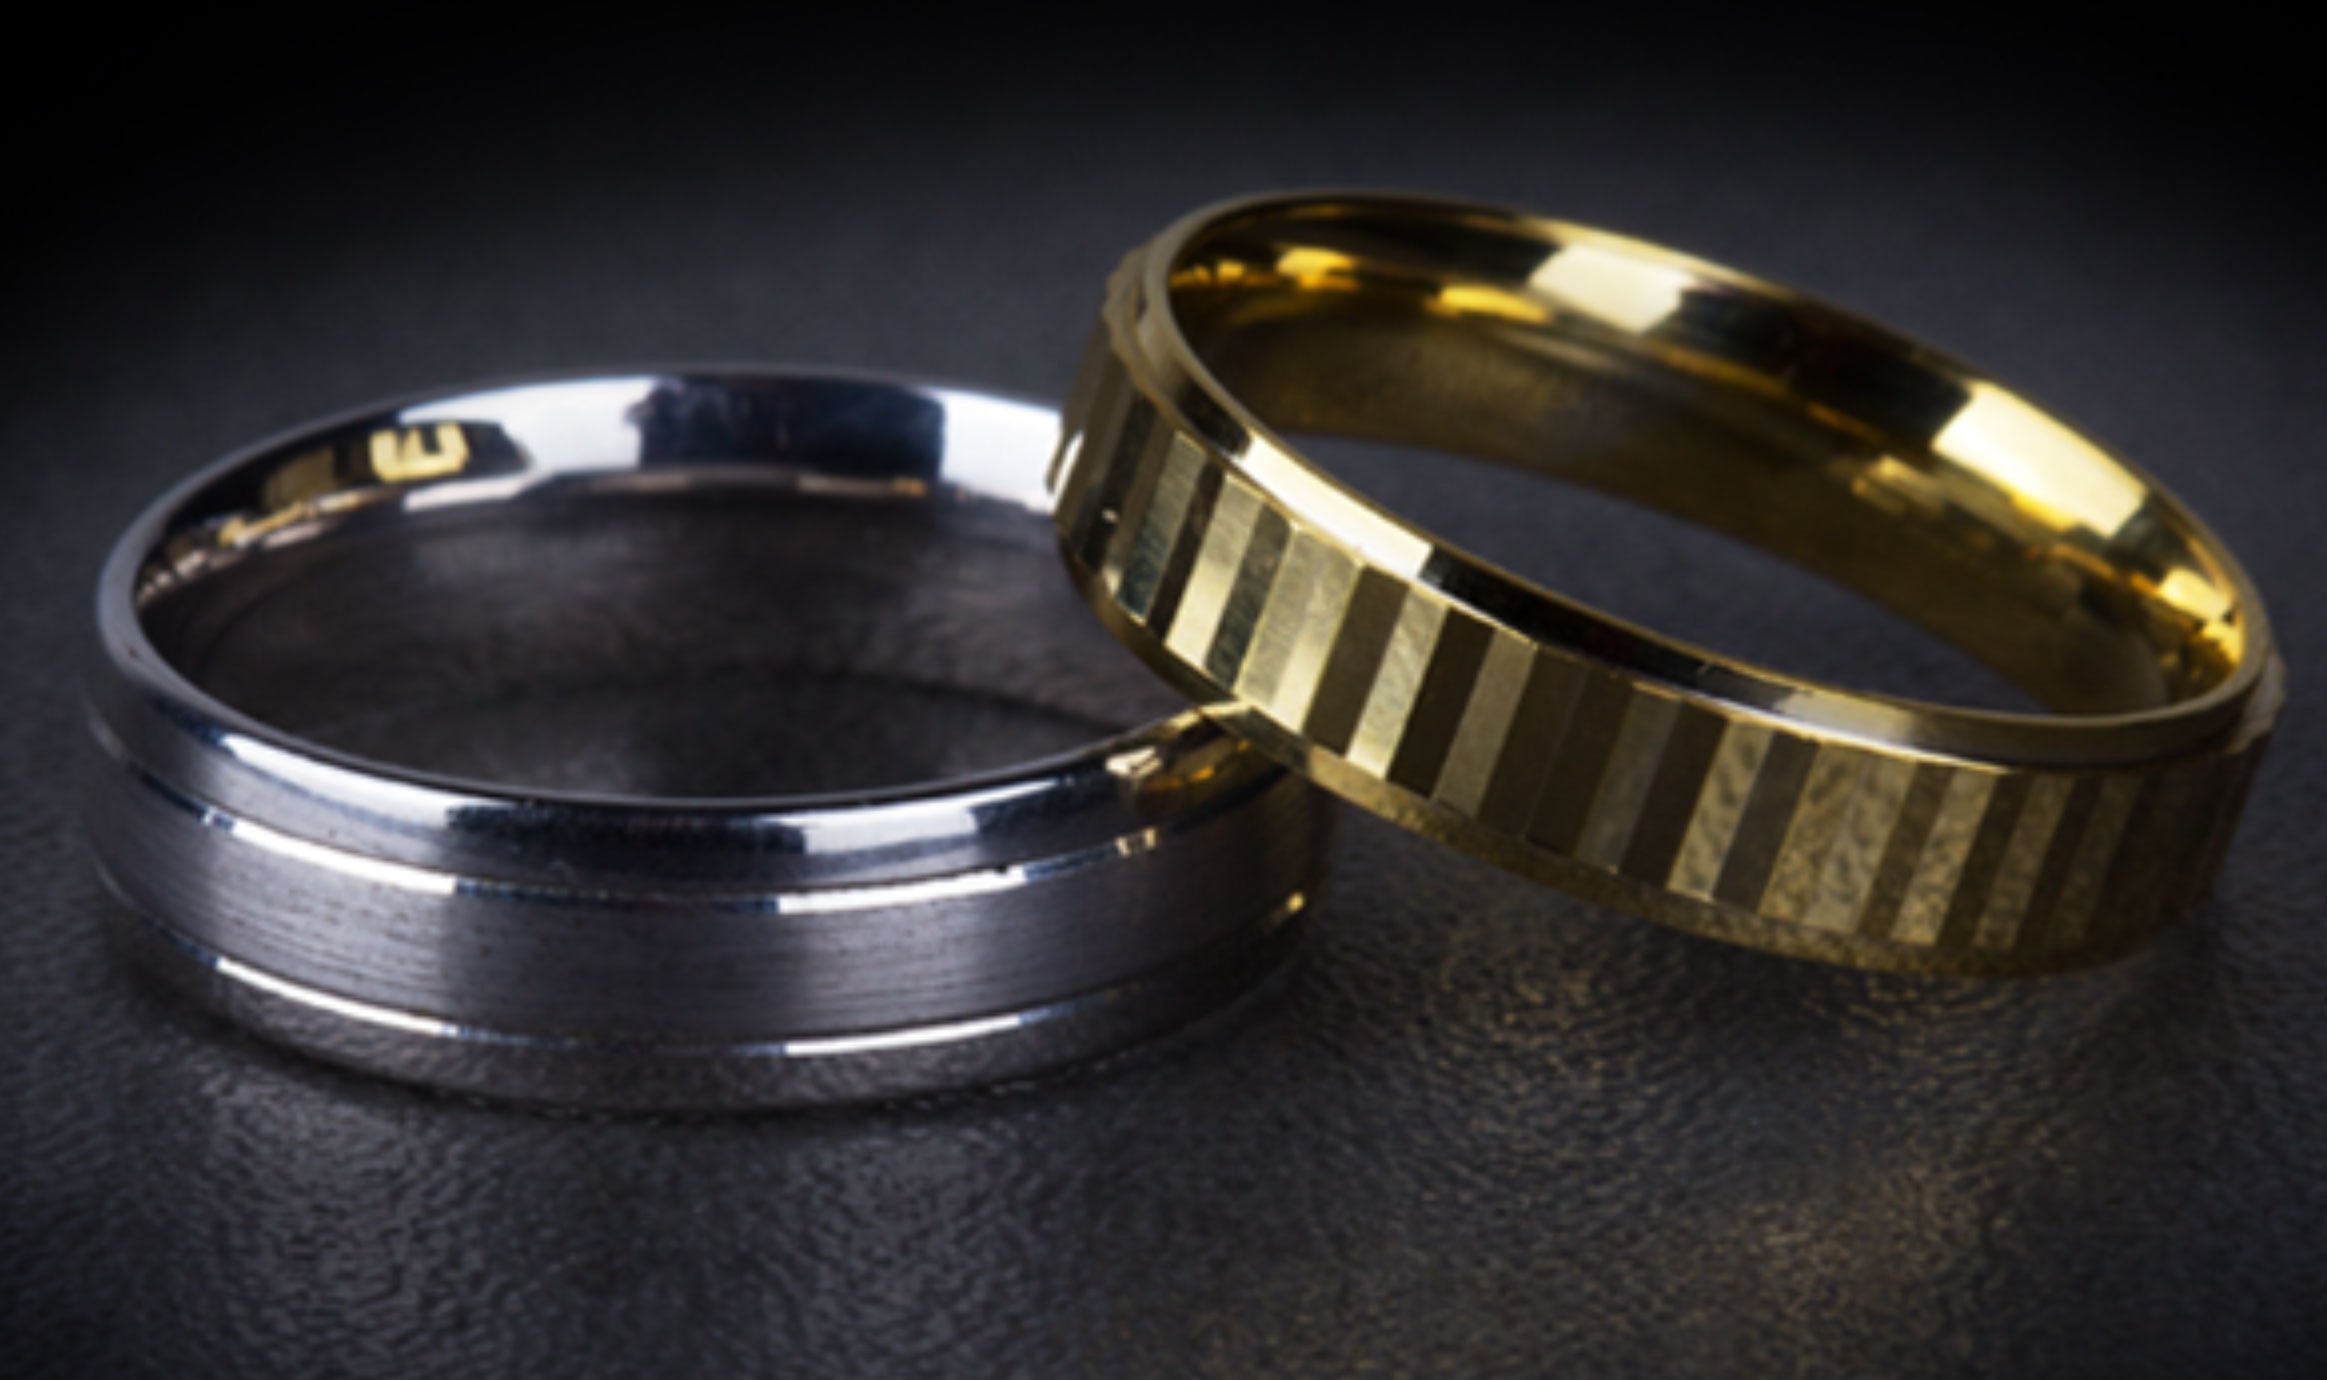 Affordable Men's Wedding Rings - Titan Men's Wedding Ring | Mens wedding  rings gold, Mens wedding rings, Mens ring designs